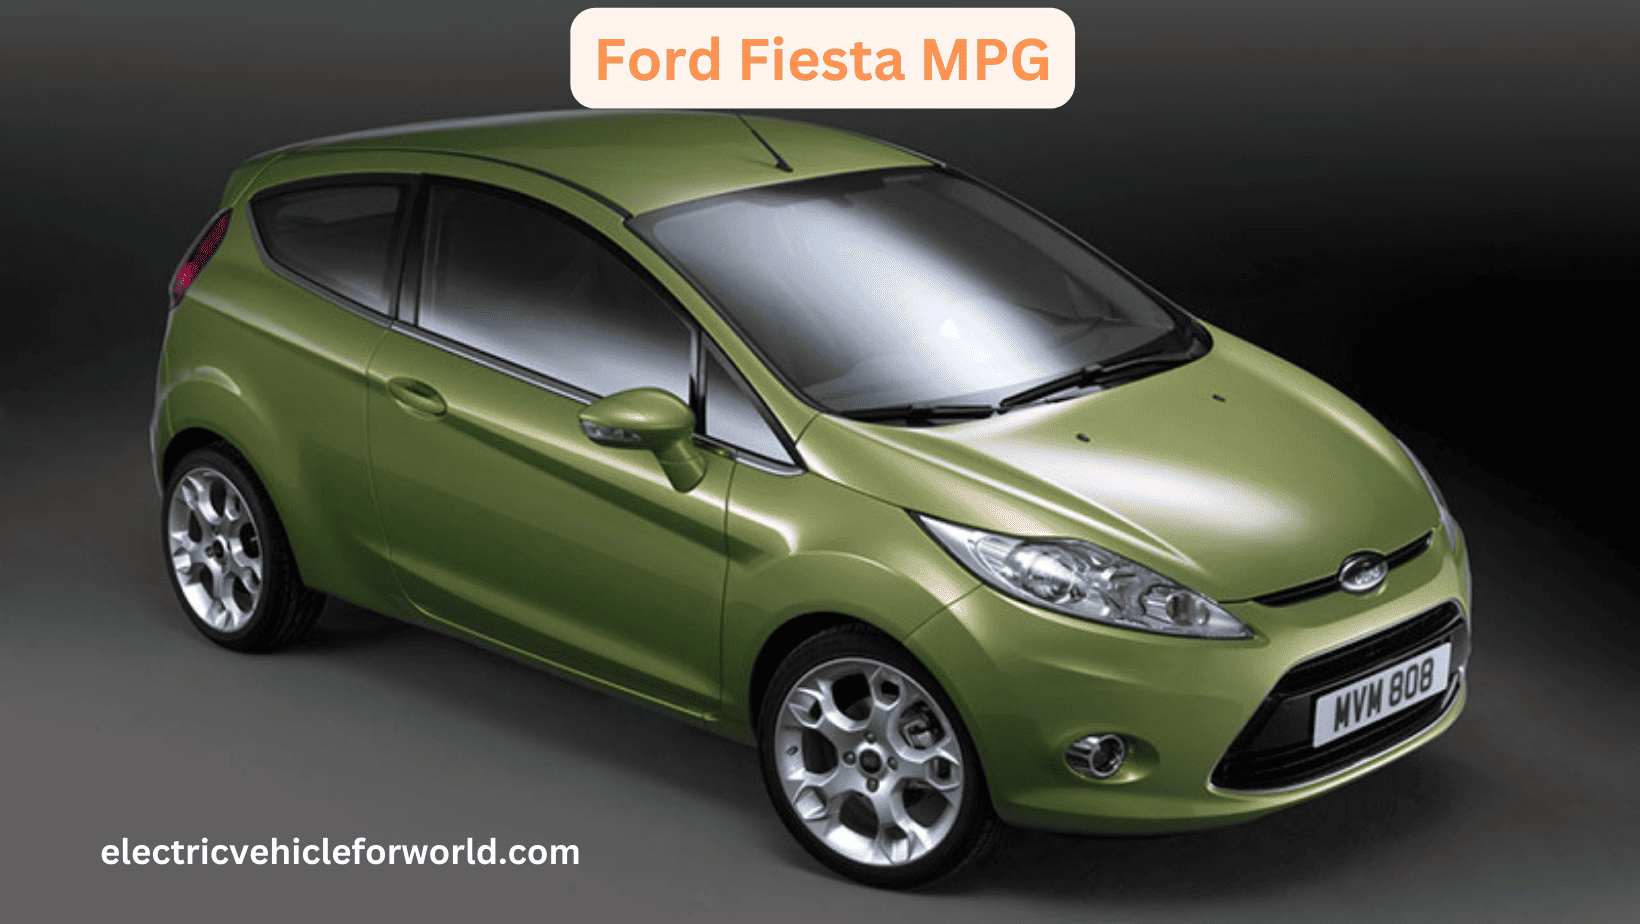 Ford Fiesta MPG